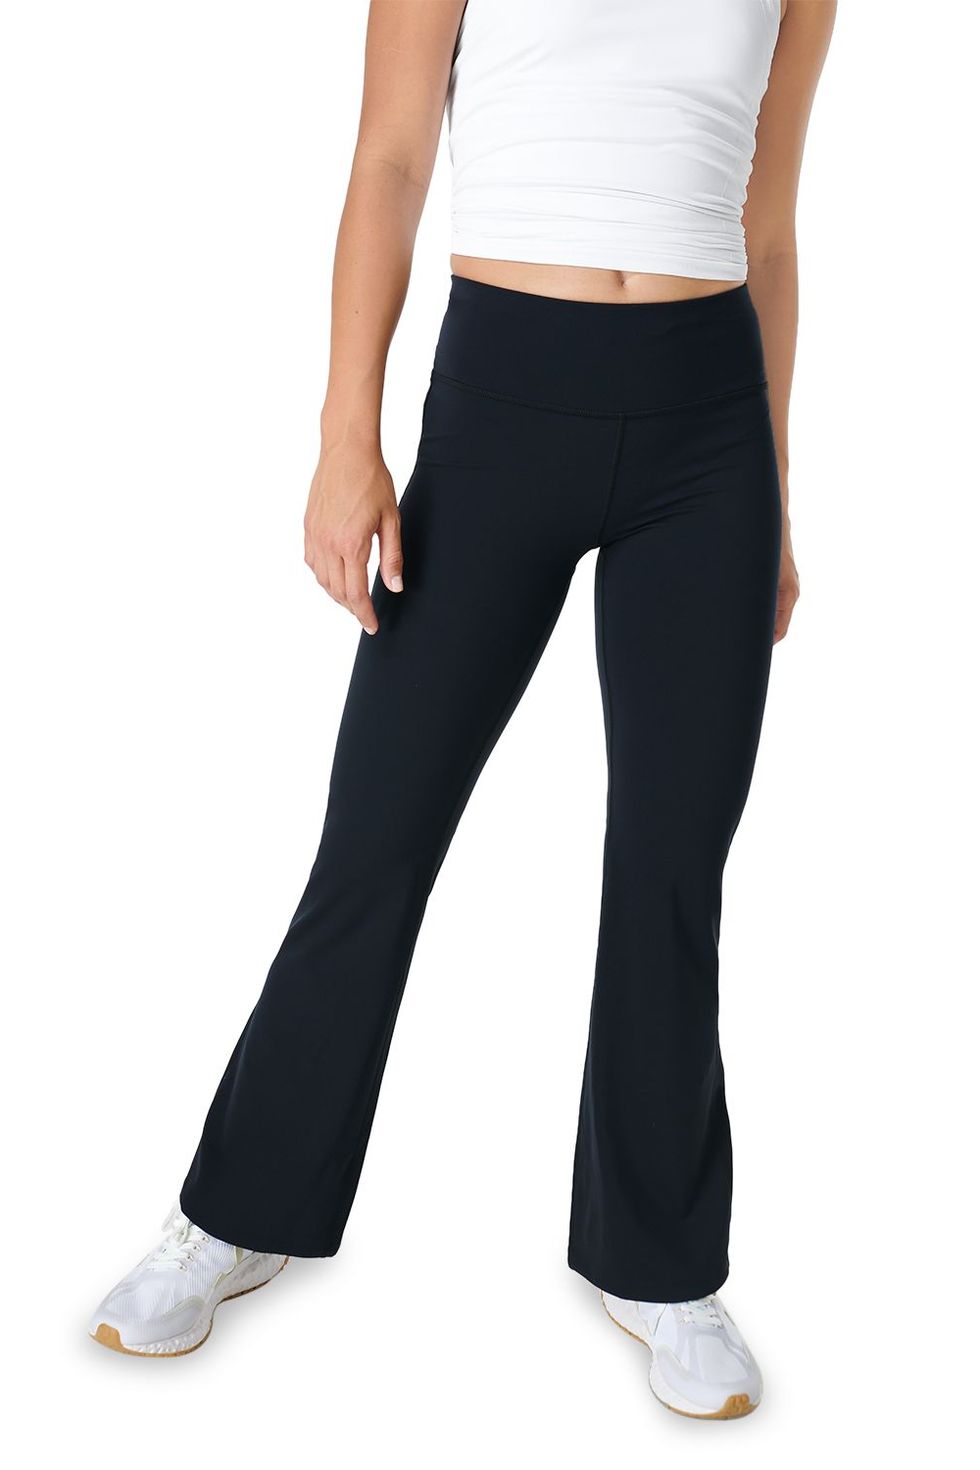 AFITNE Women's Bootcut Yoga Pants with Pockets, High Waist Workout Bootleg  Yoga Pants Tummy Control 4 Way Stretch Pants, Black, 3X-Large